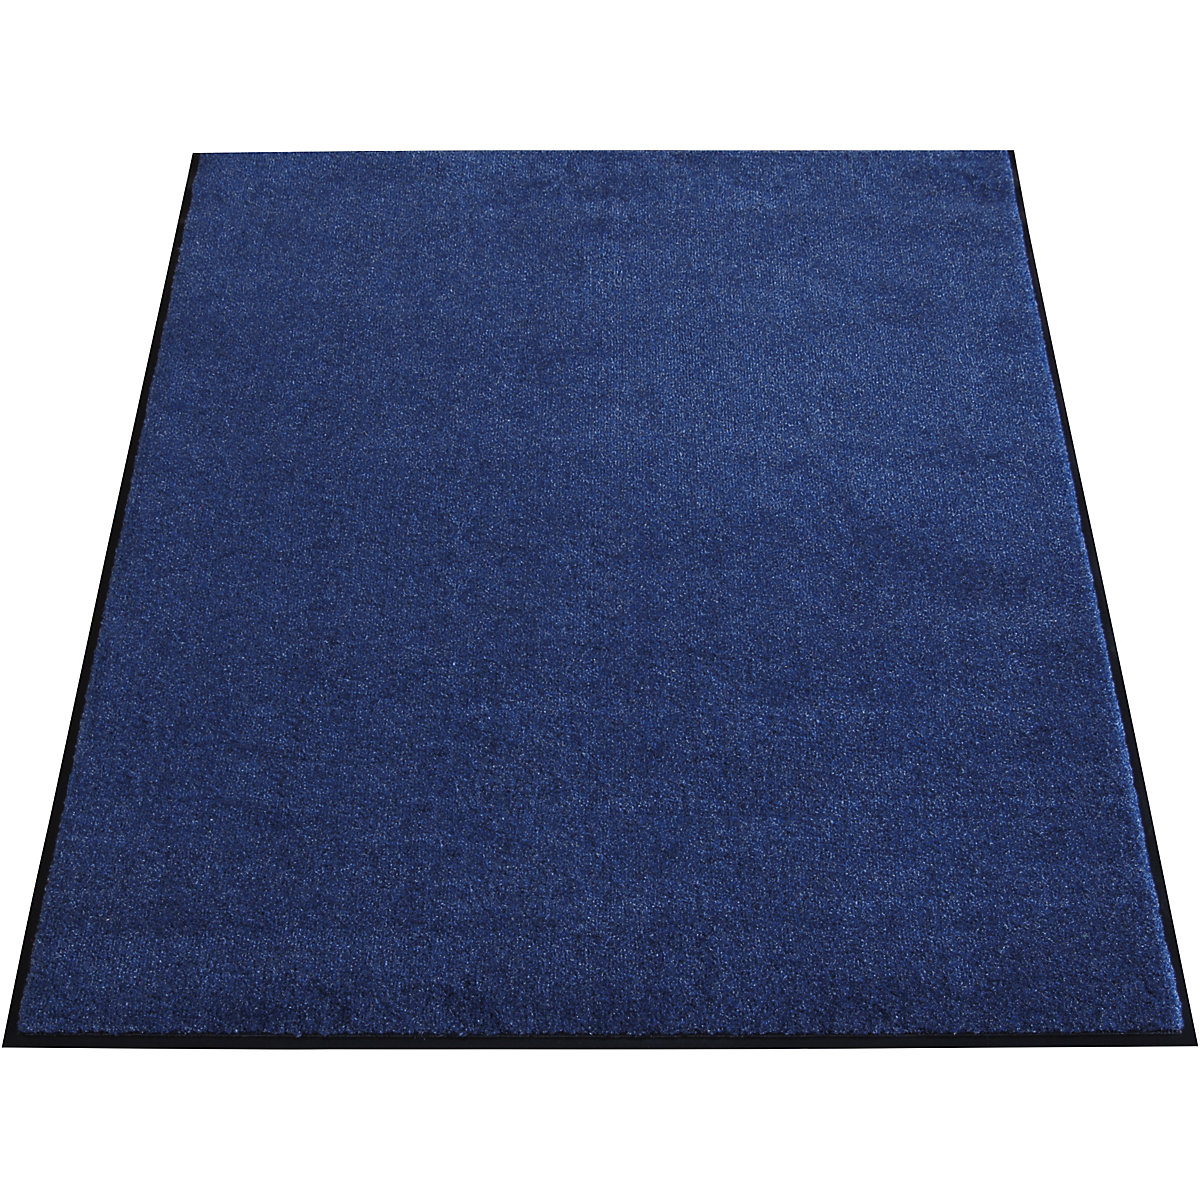 EAZYCARE AQUA entrance matting, LxW 1500 x 900 mm, blue